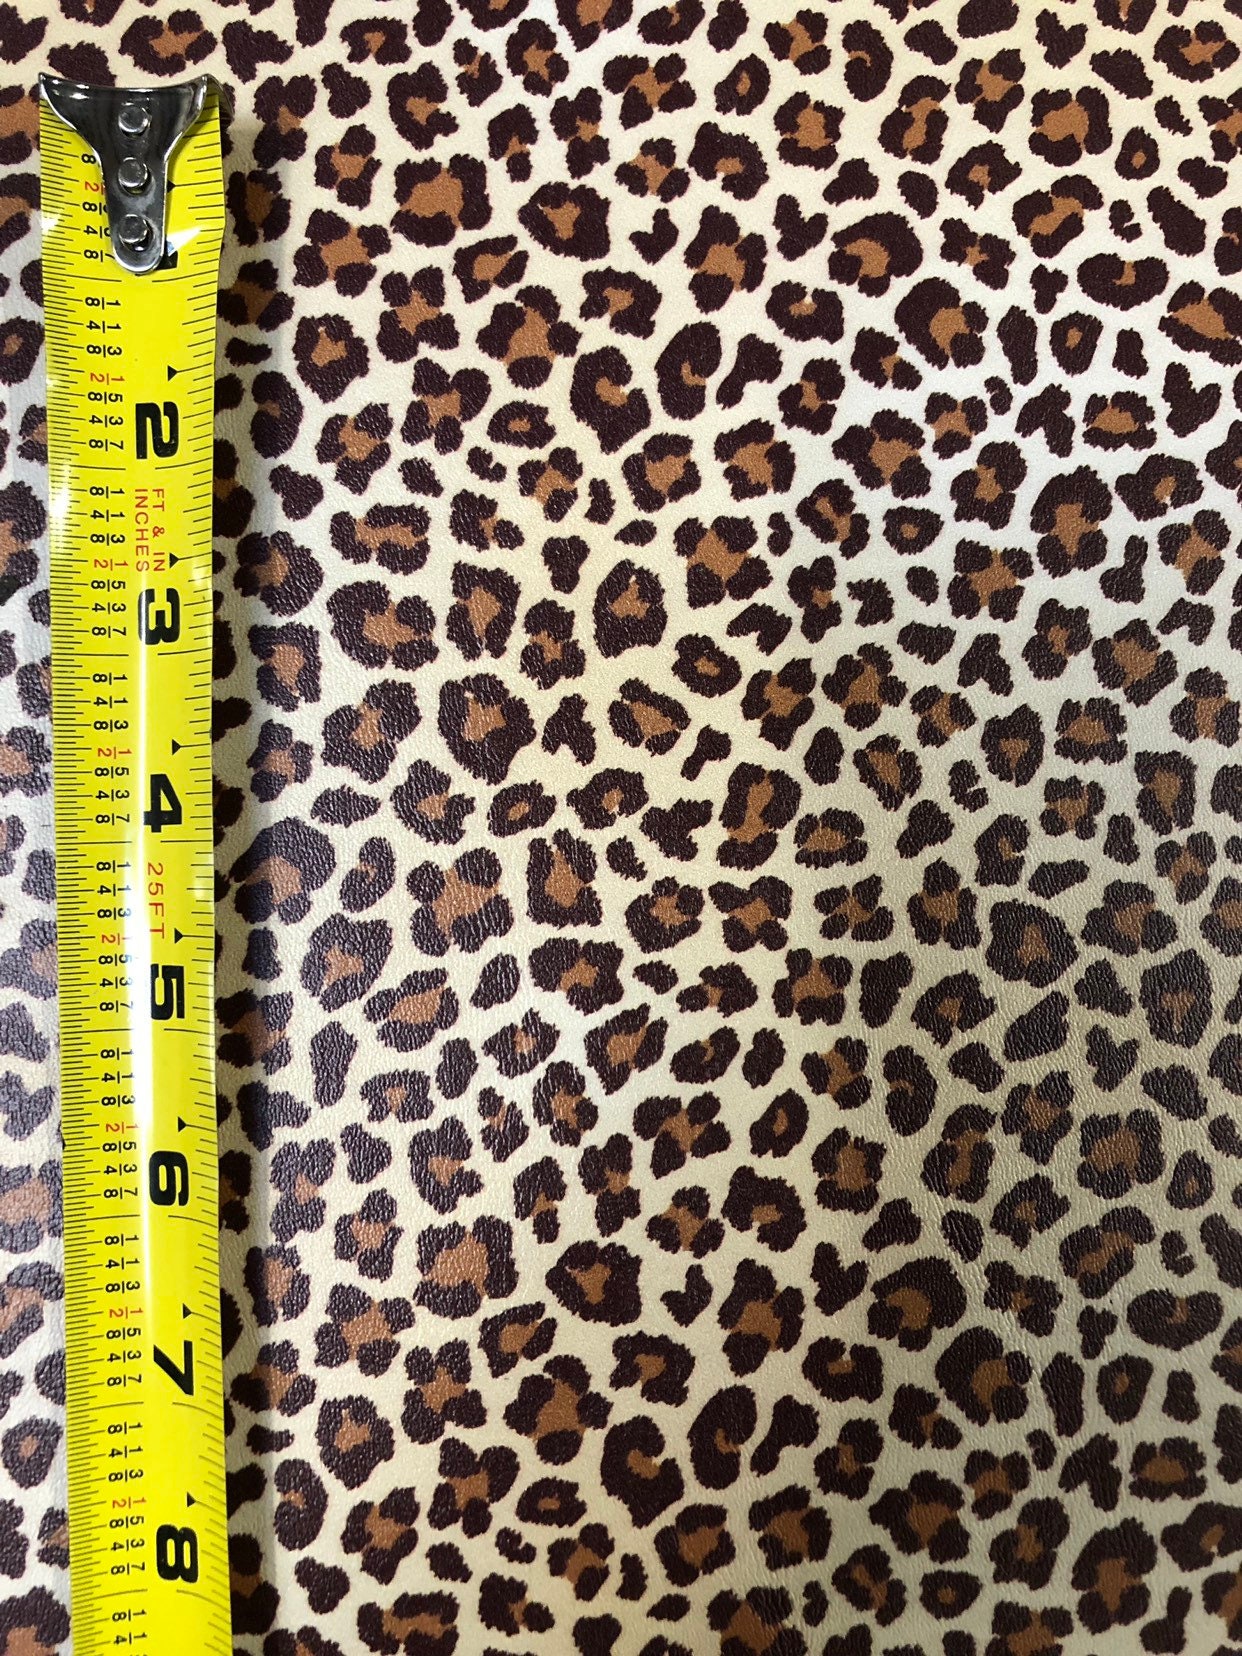 Marine Vinyl Yard Cheetah Upholstery Vinyl Faux Leather | Etsy